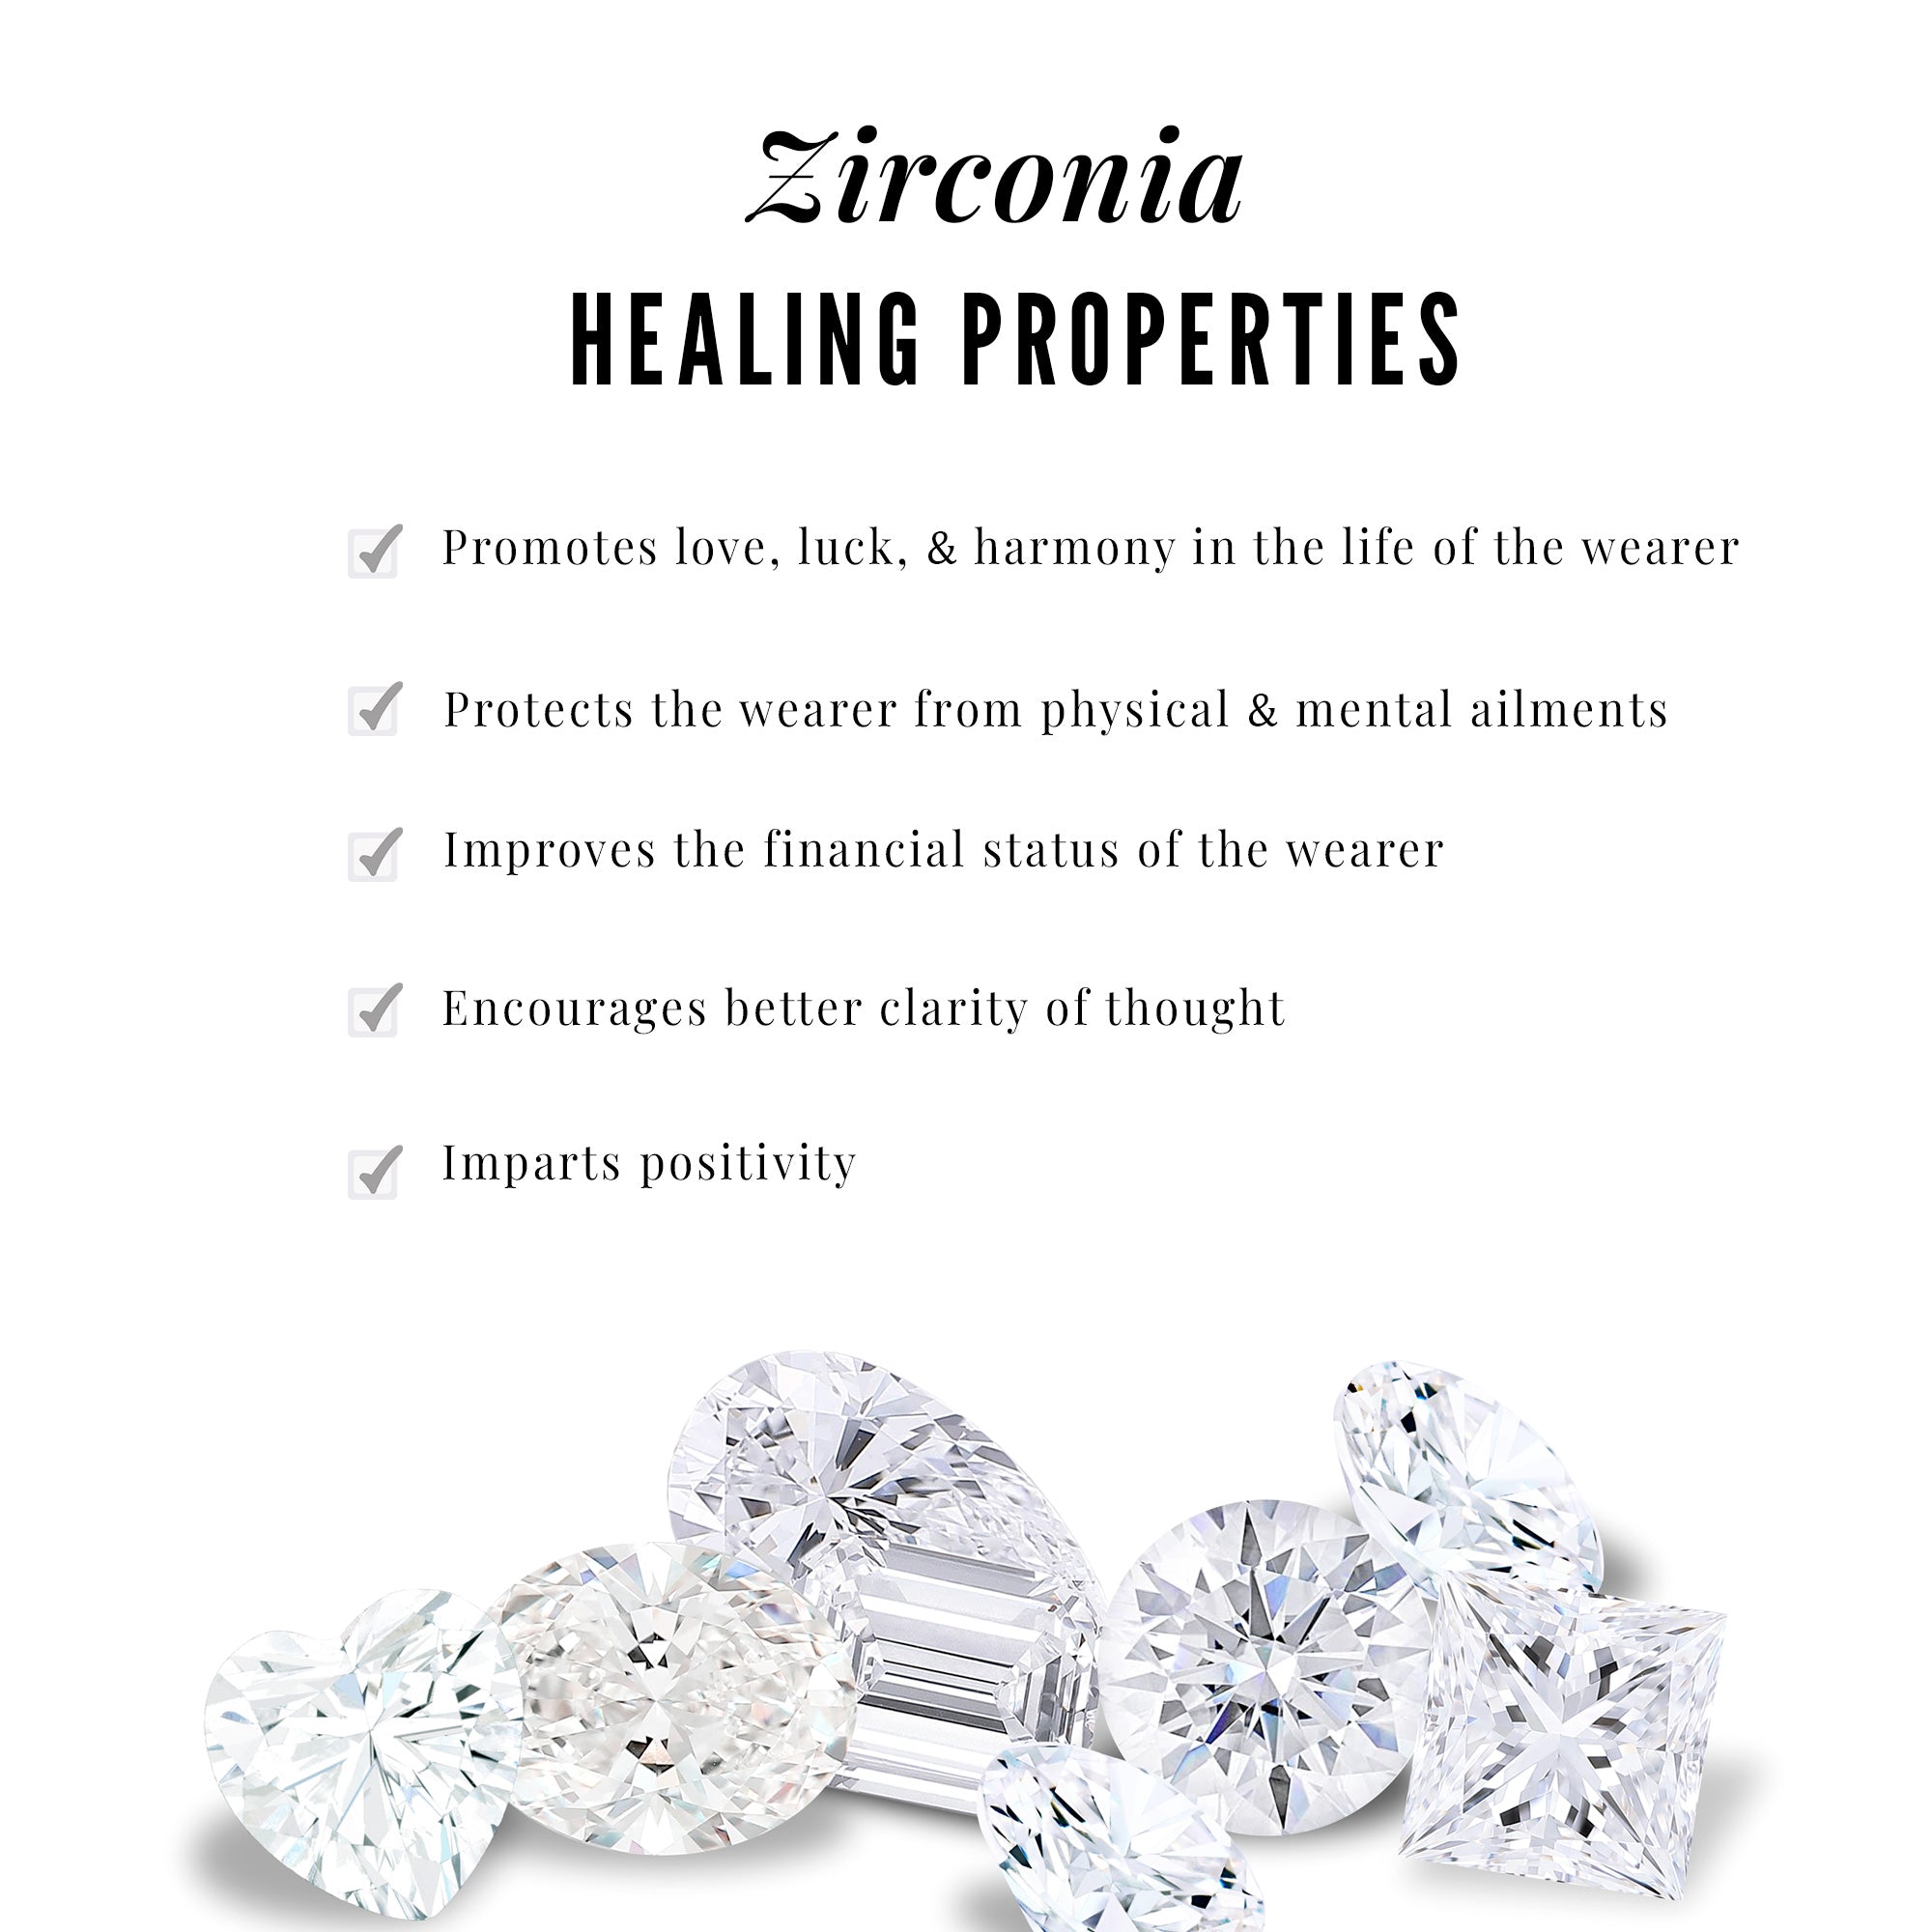 0.5 CT Certified Cubic Zirconia Snowflake Pendant Necklace in Gold Zircon - ( AAAA ) - Quality - Rosec Jewels